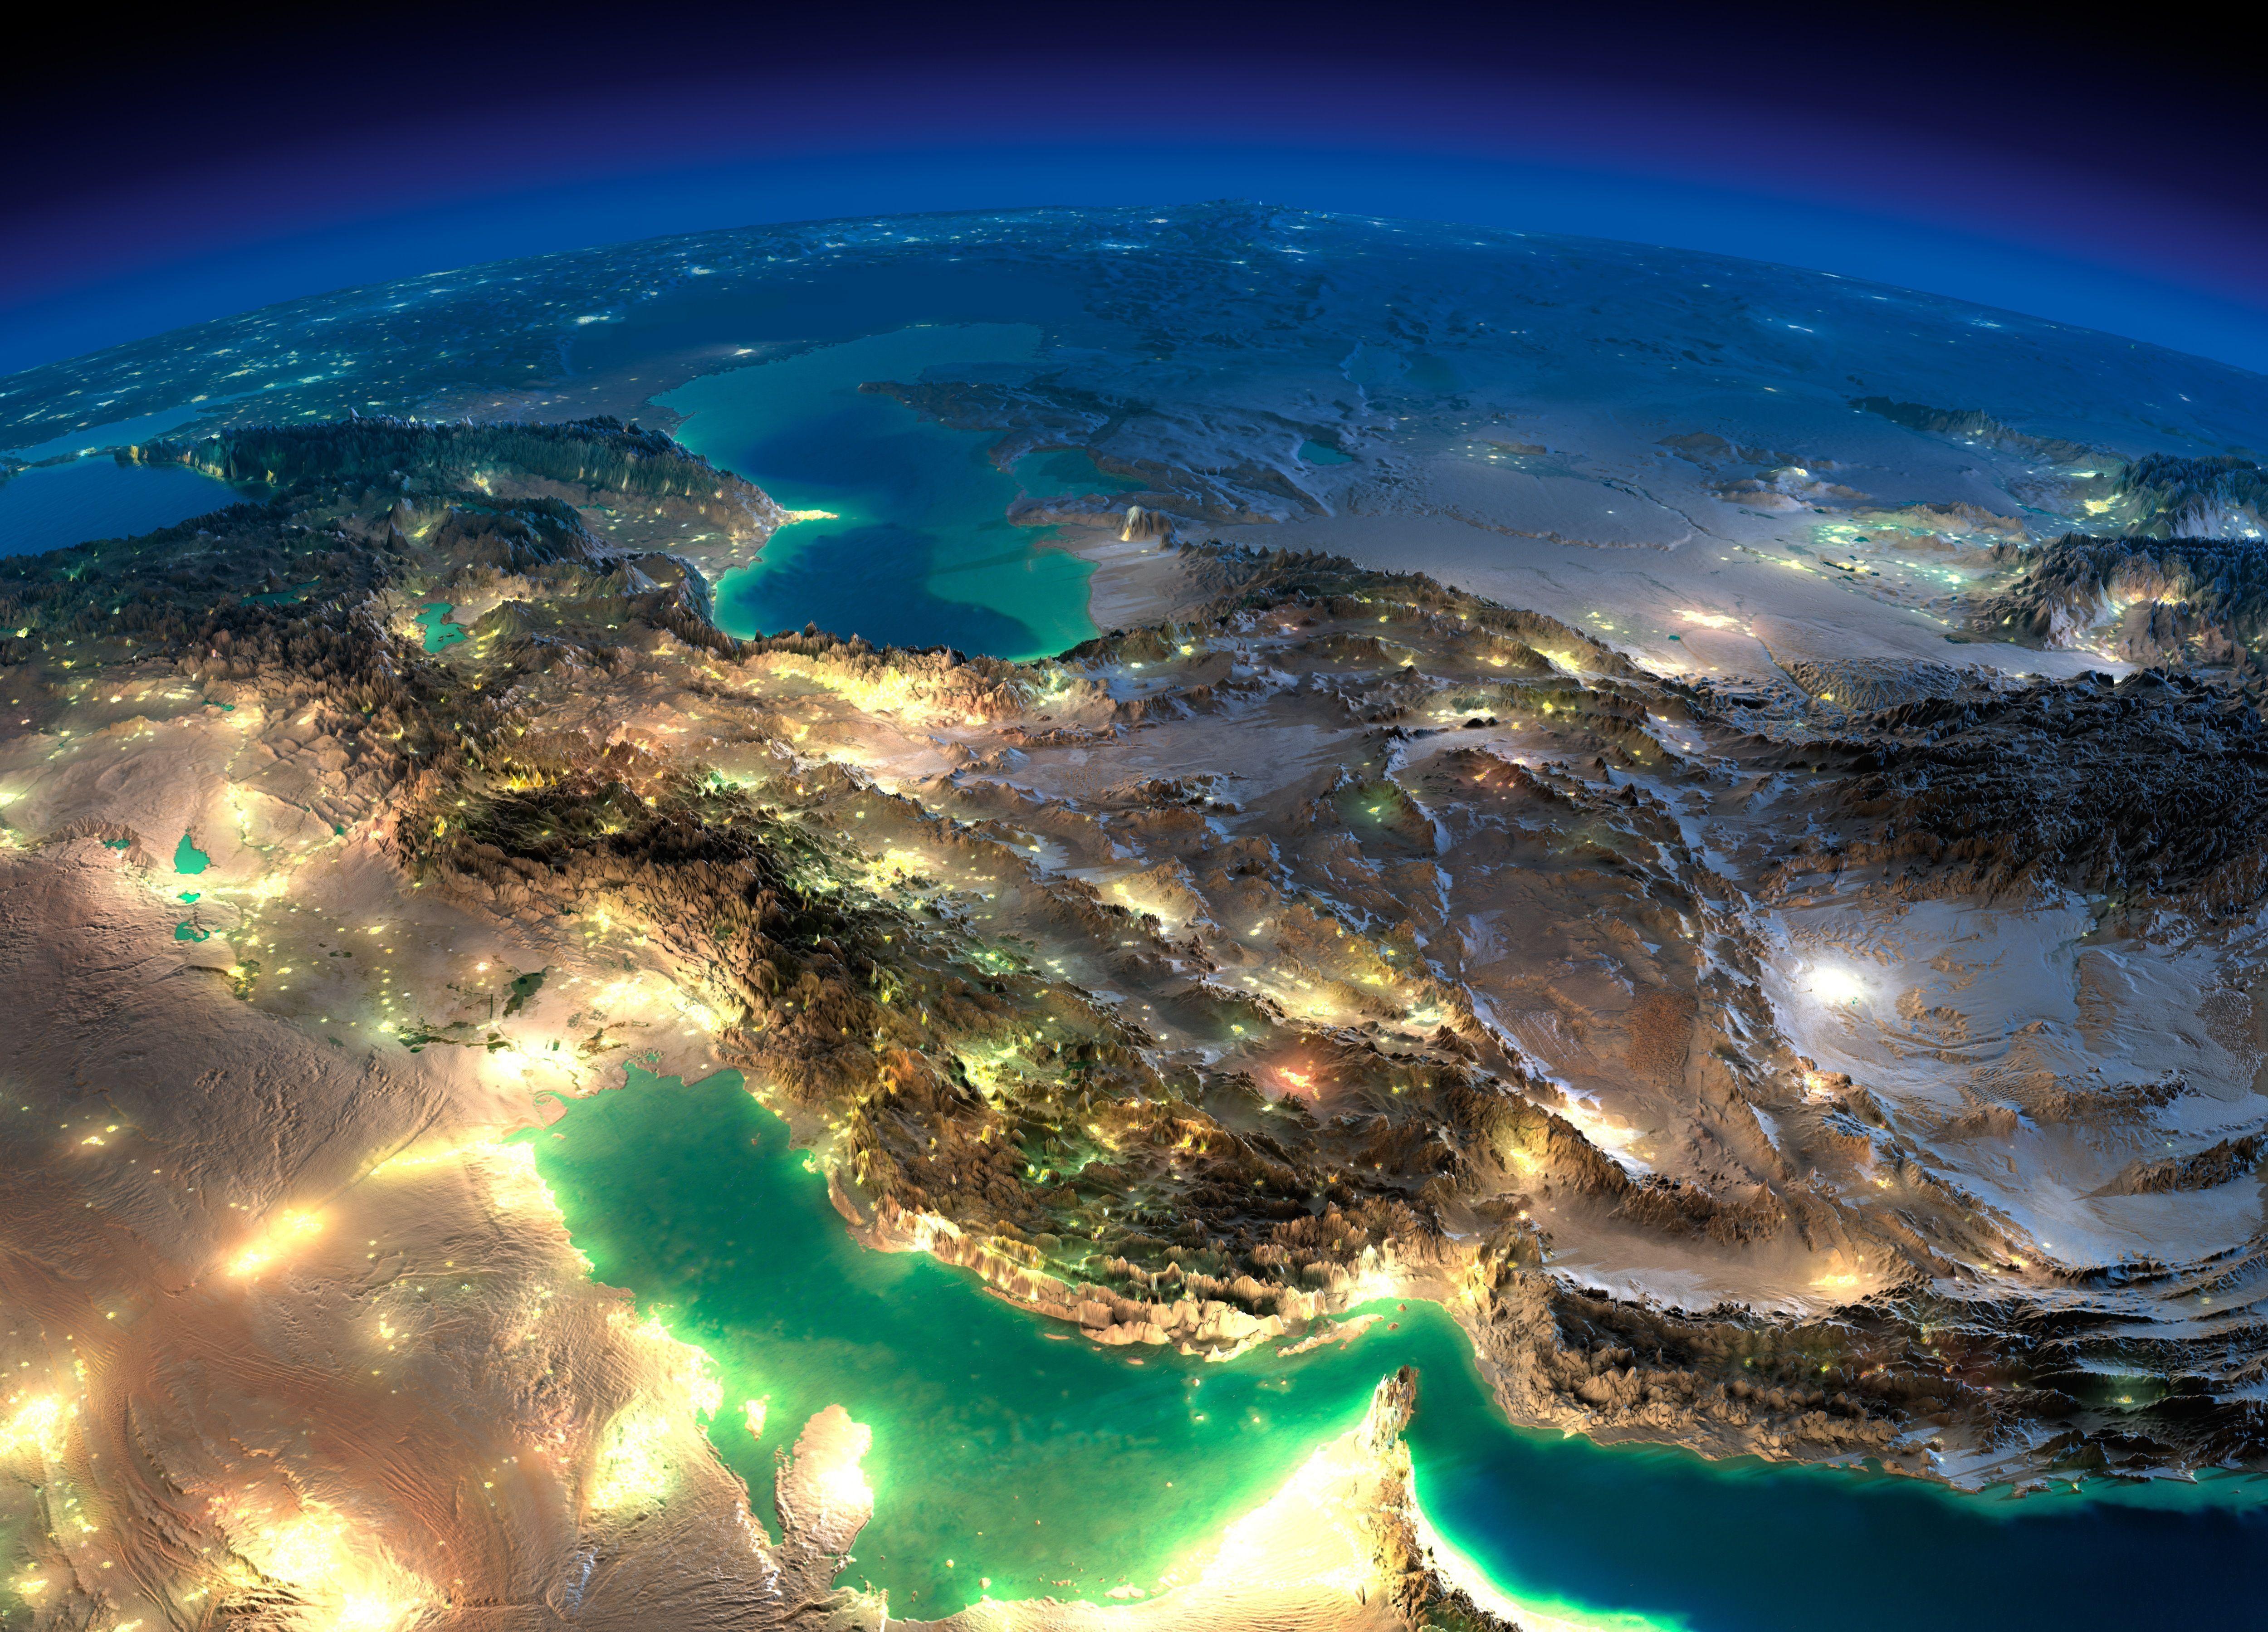 The Persian Gulf 4k Ultra HD Wallpaper